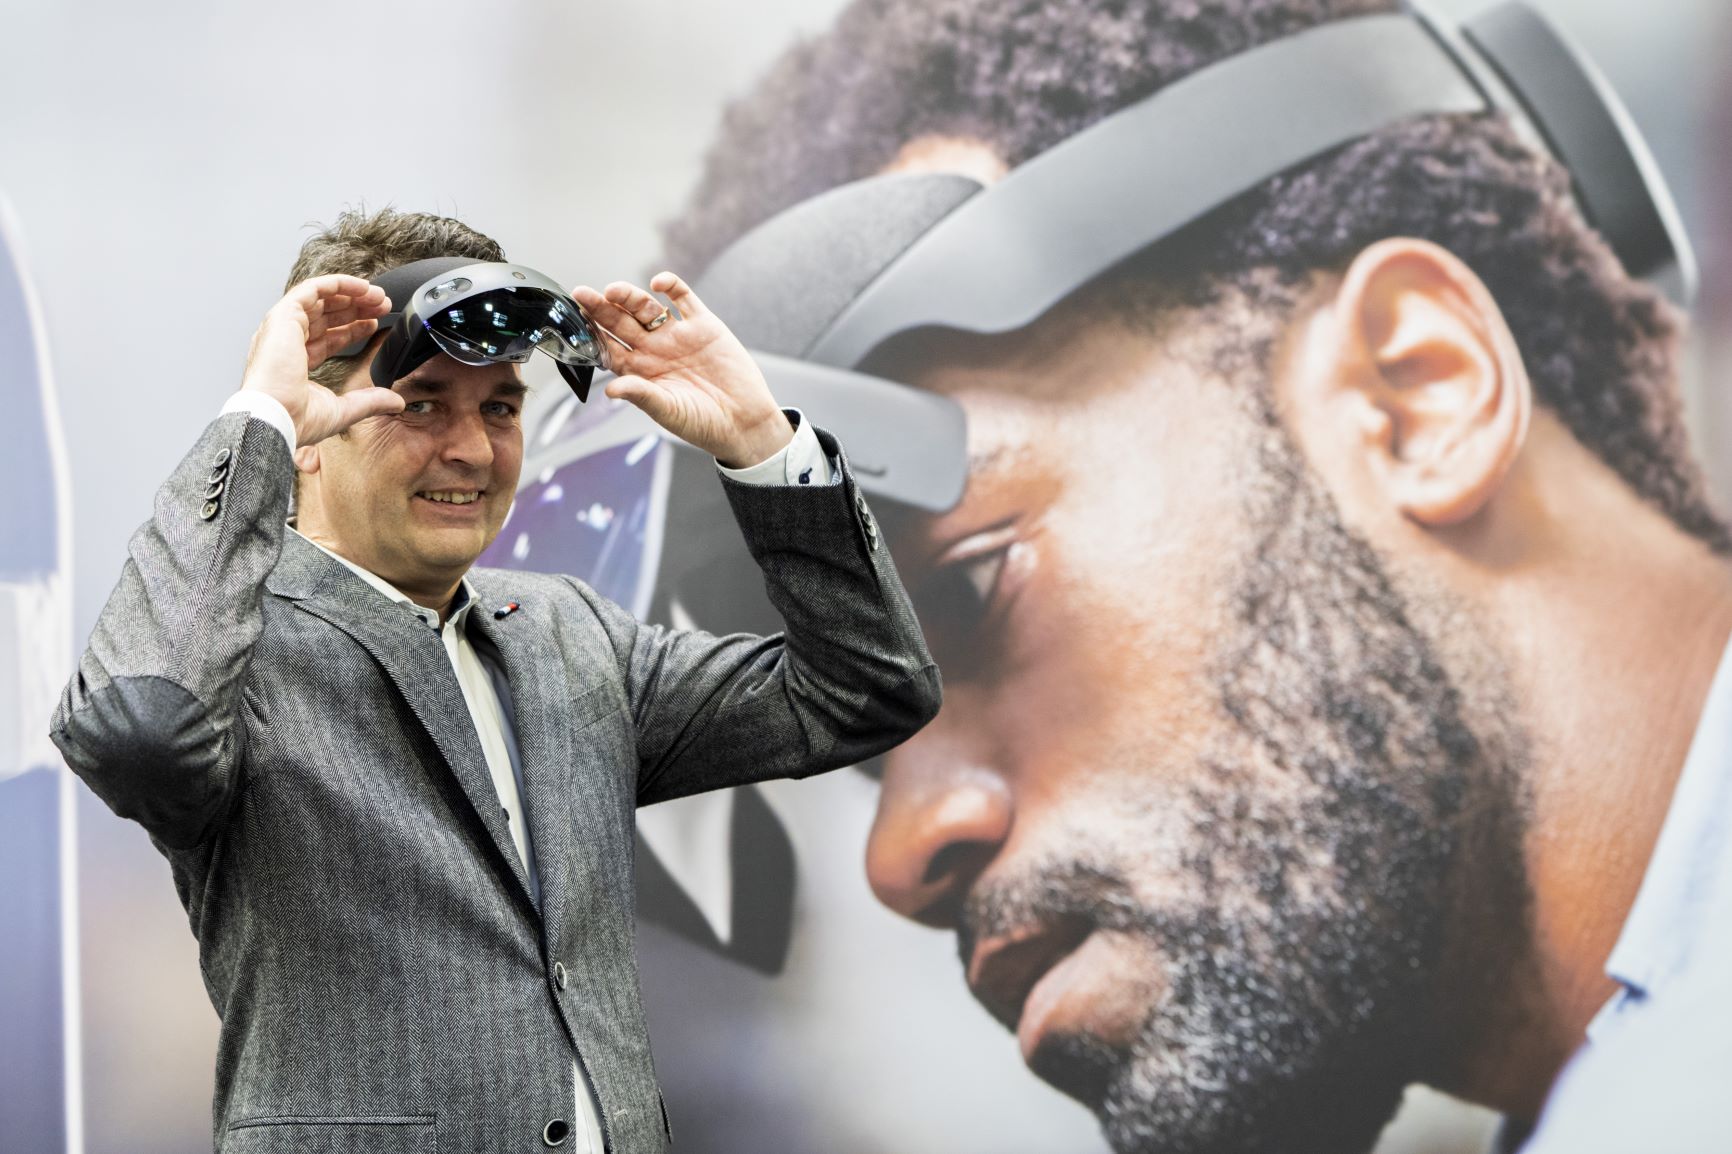 Microsoft HoloLens demo at Hannover Messe 2019